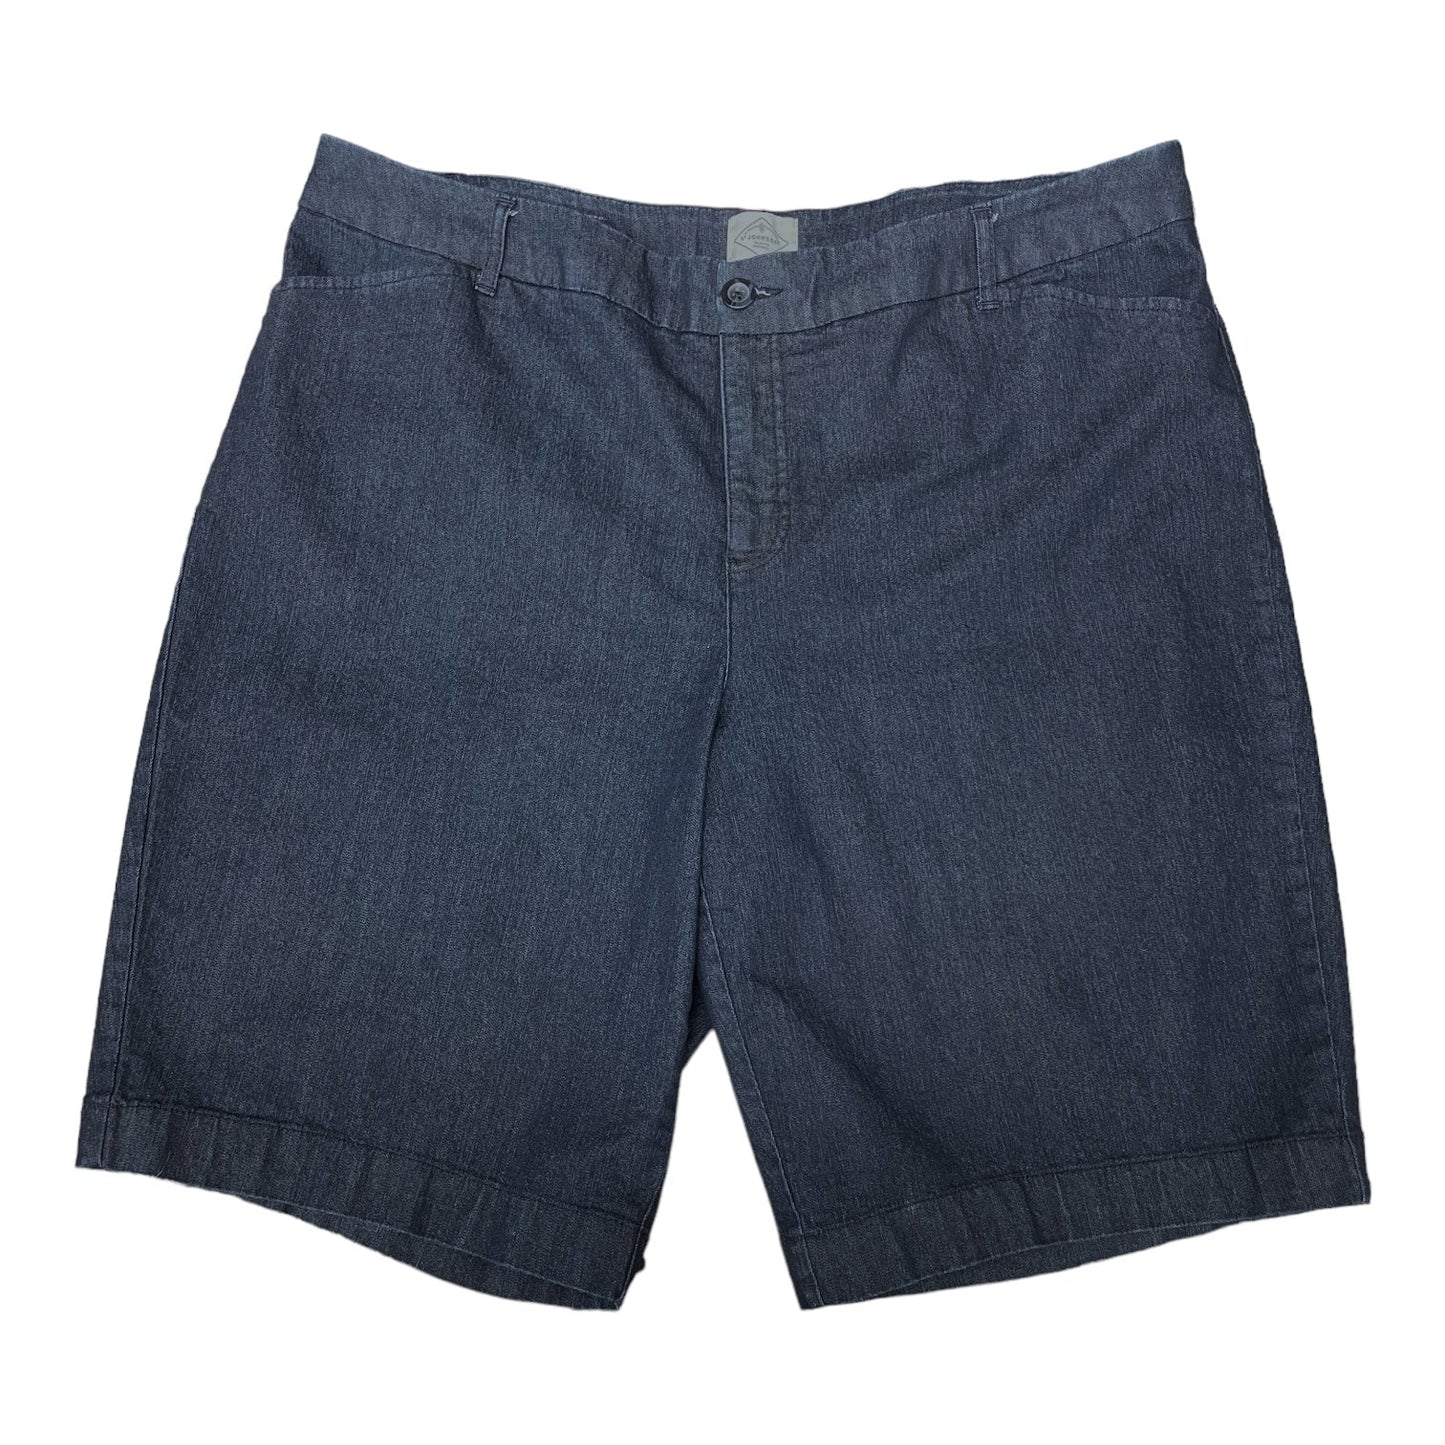 Blue Denim Shorts St Johns Bay, Size 20